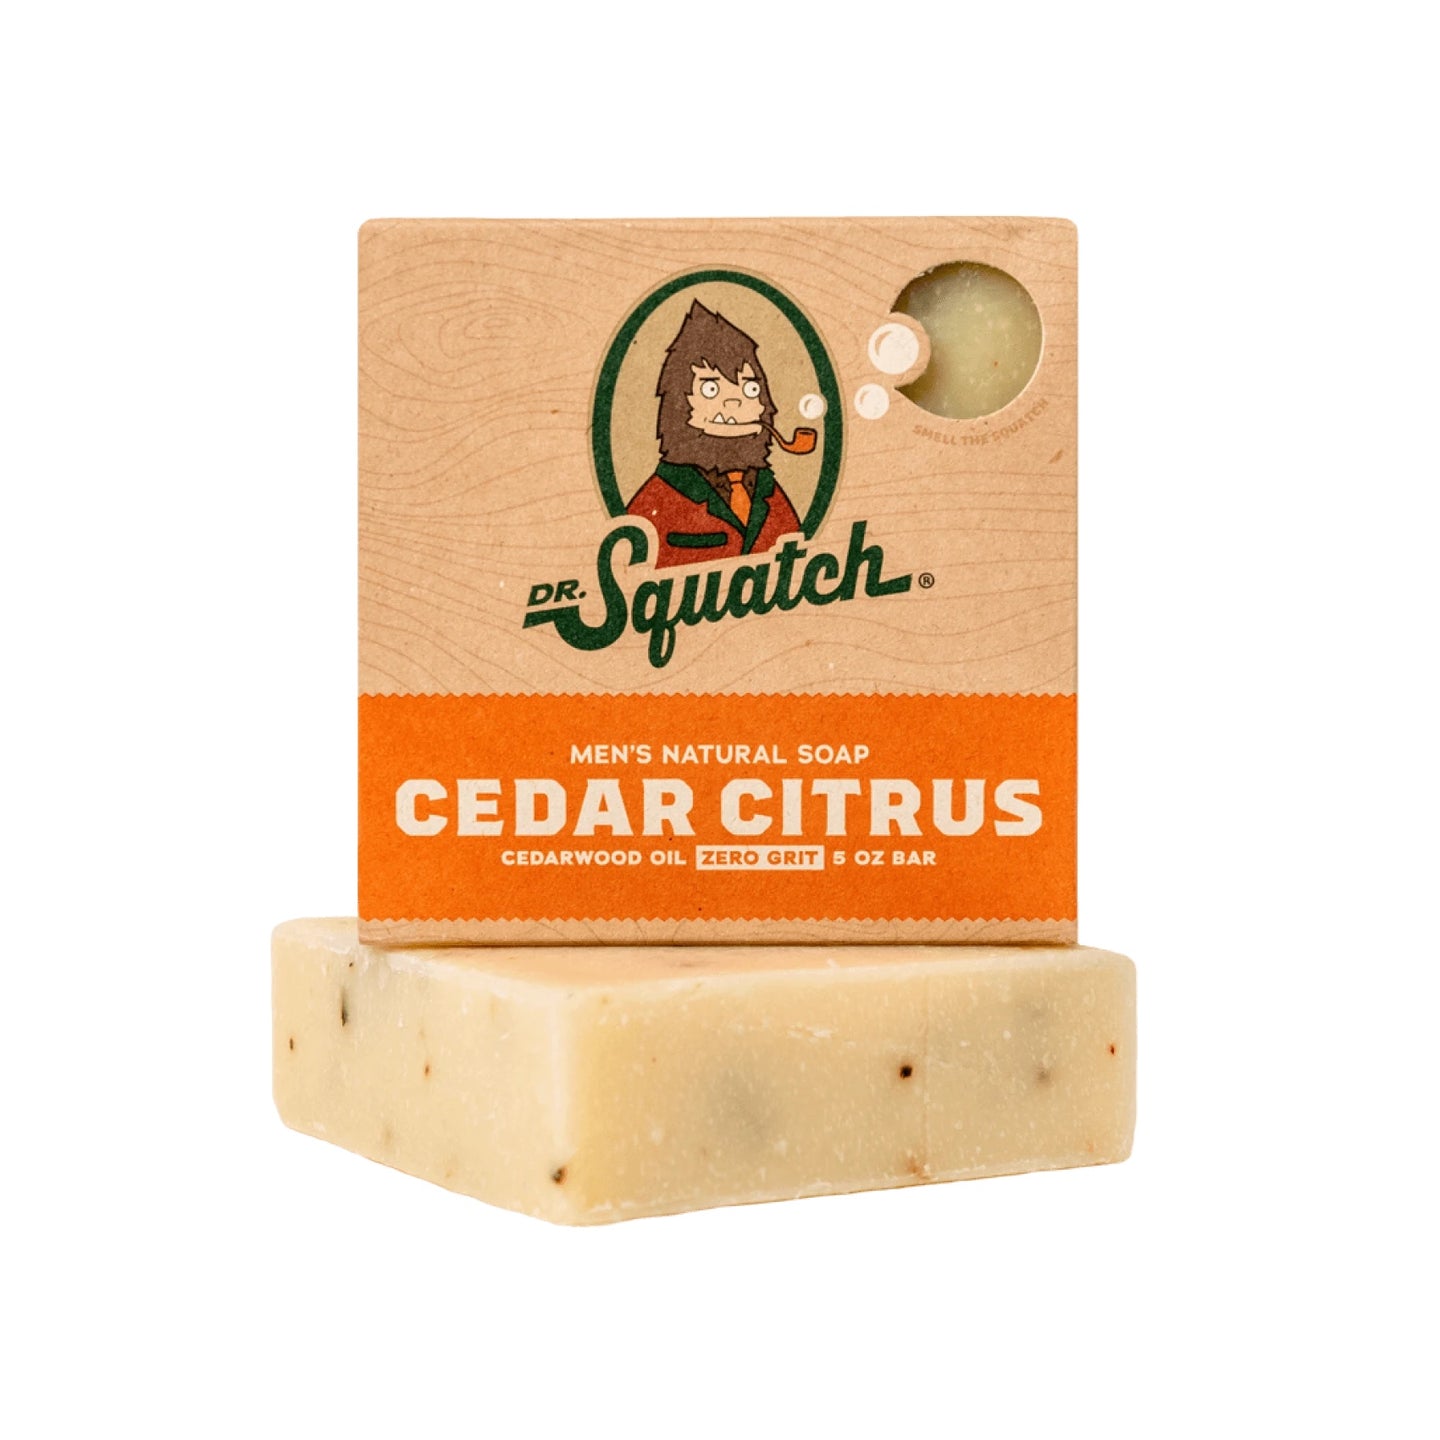 Dr. Squatch Bar Soap, Cedar Citrus